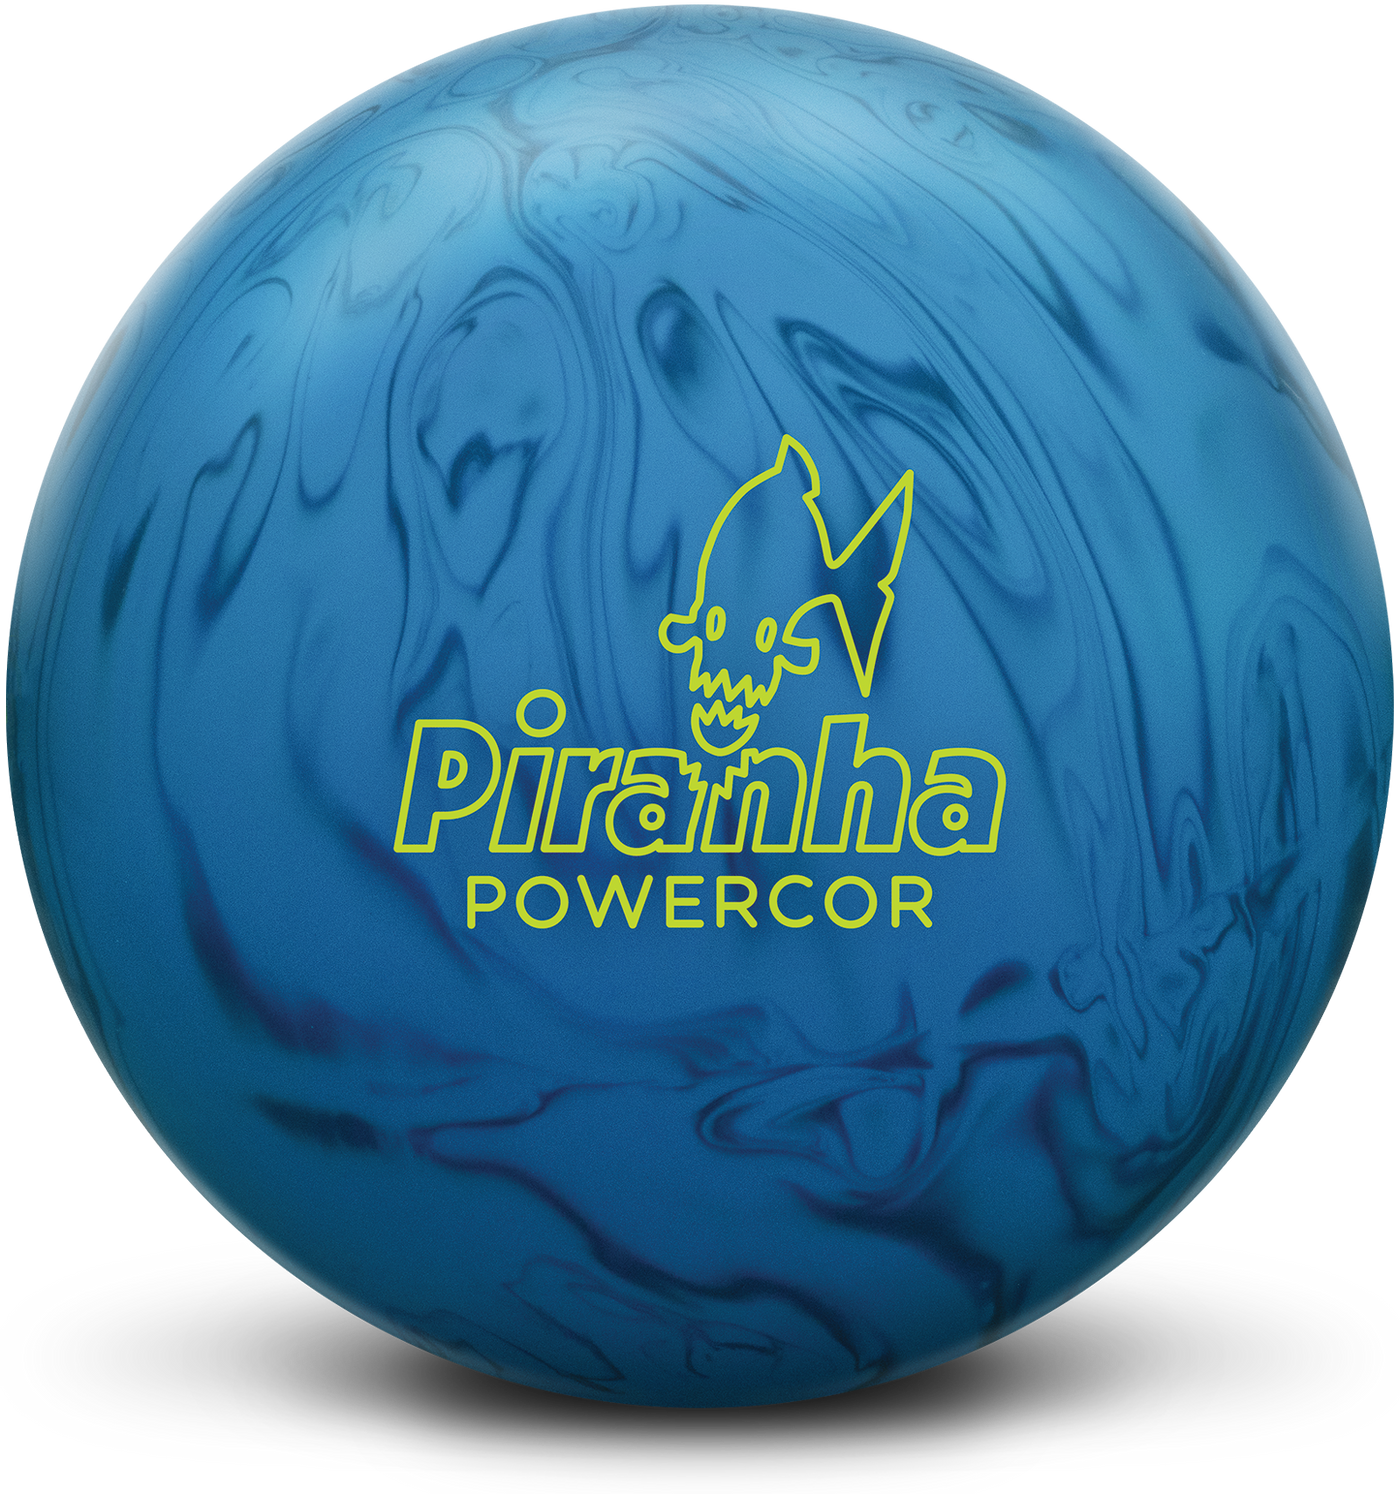 Piranha PowerCOR bowling ball